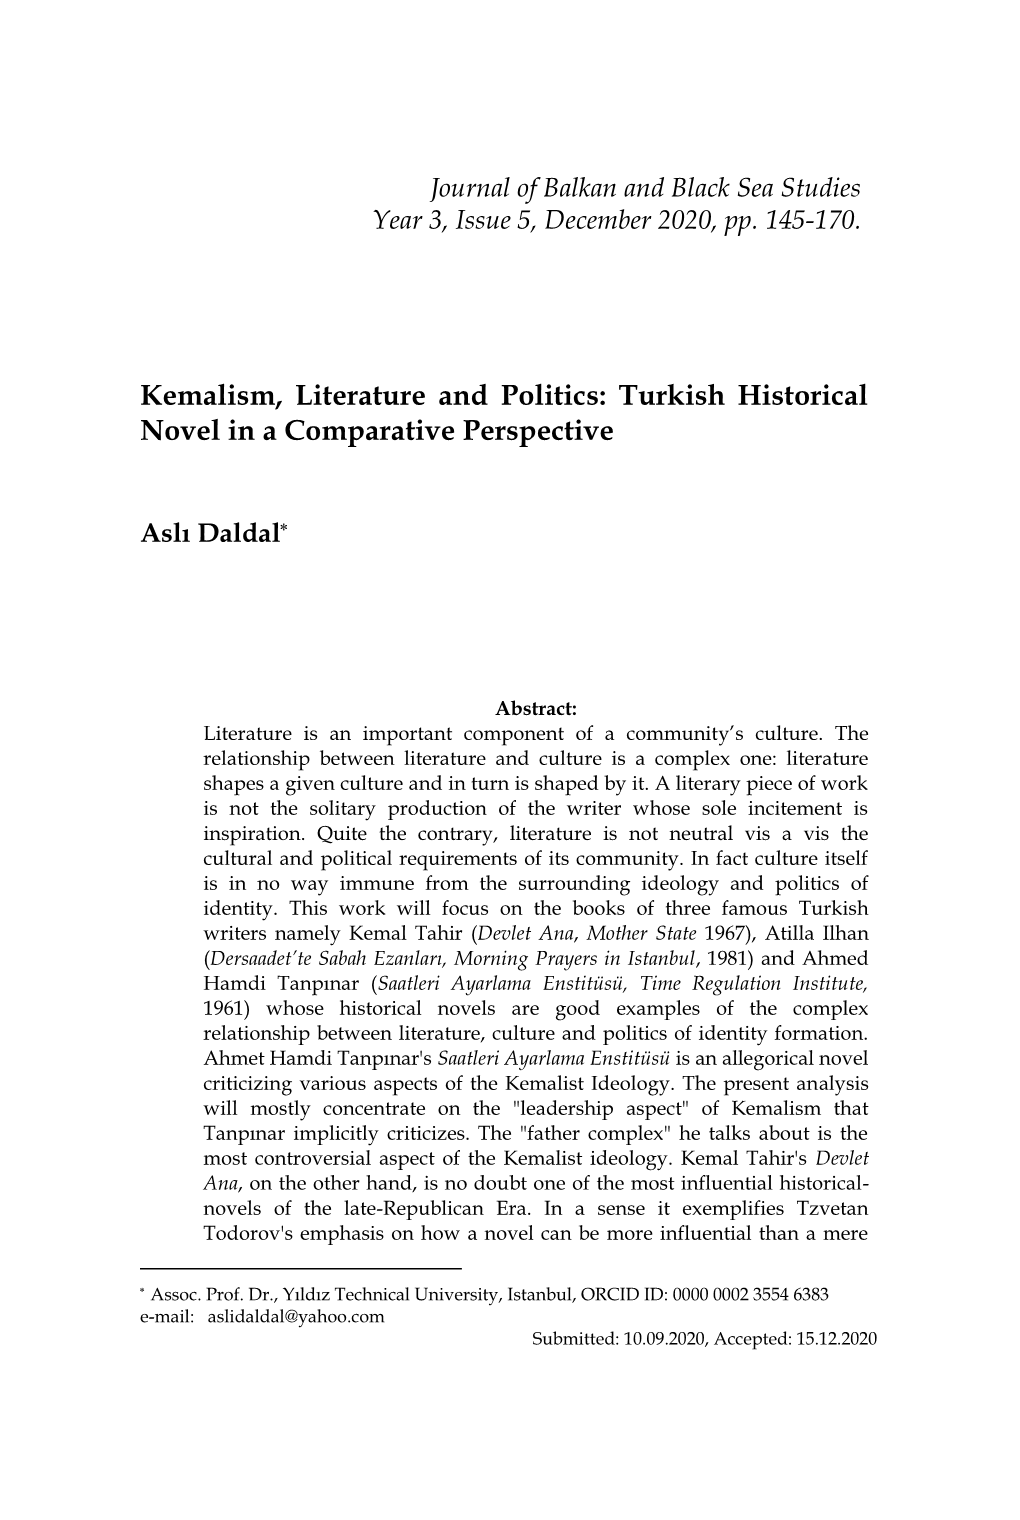 Politics and Literature in Turkish Historical Novel: Kemal Tahir, Atilla